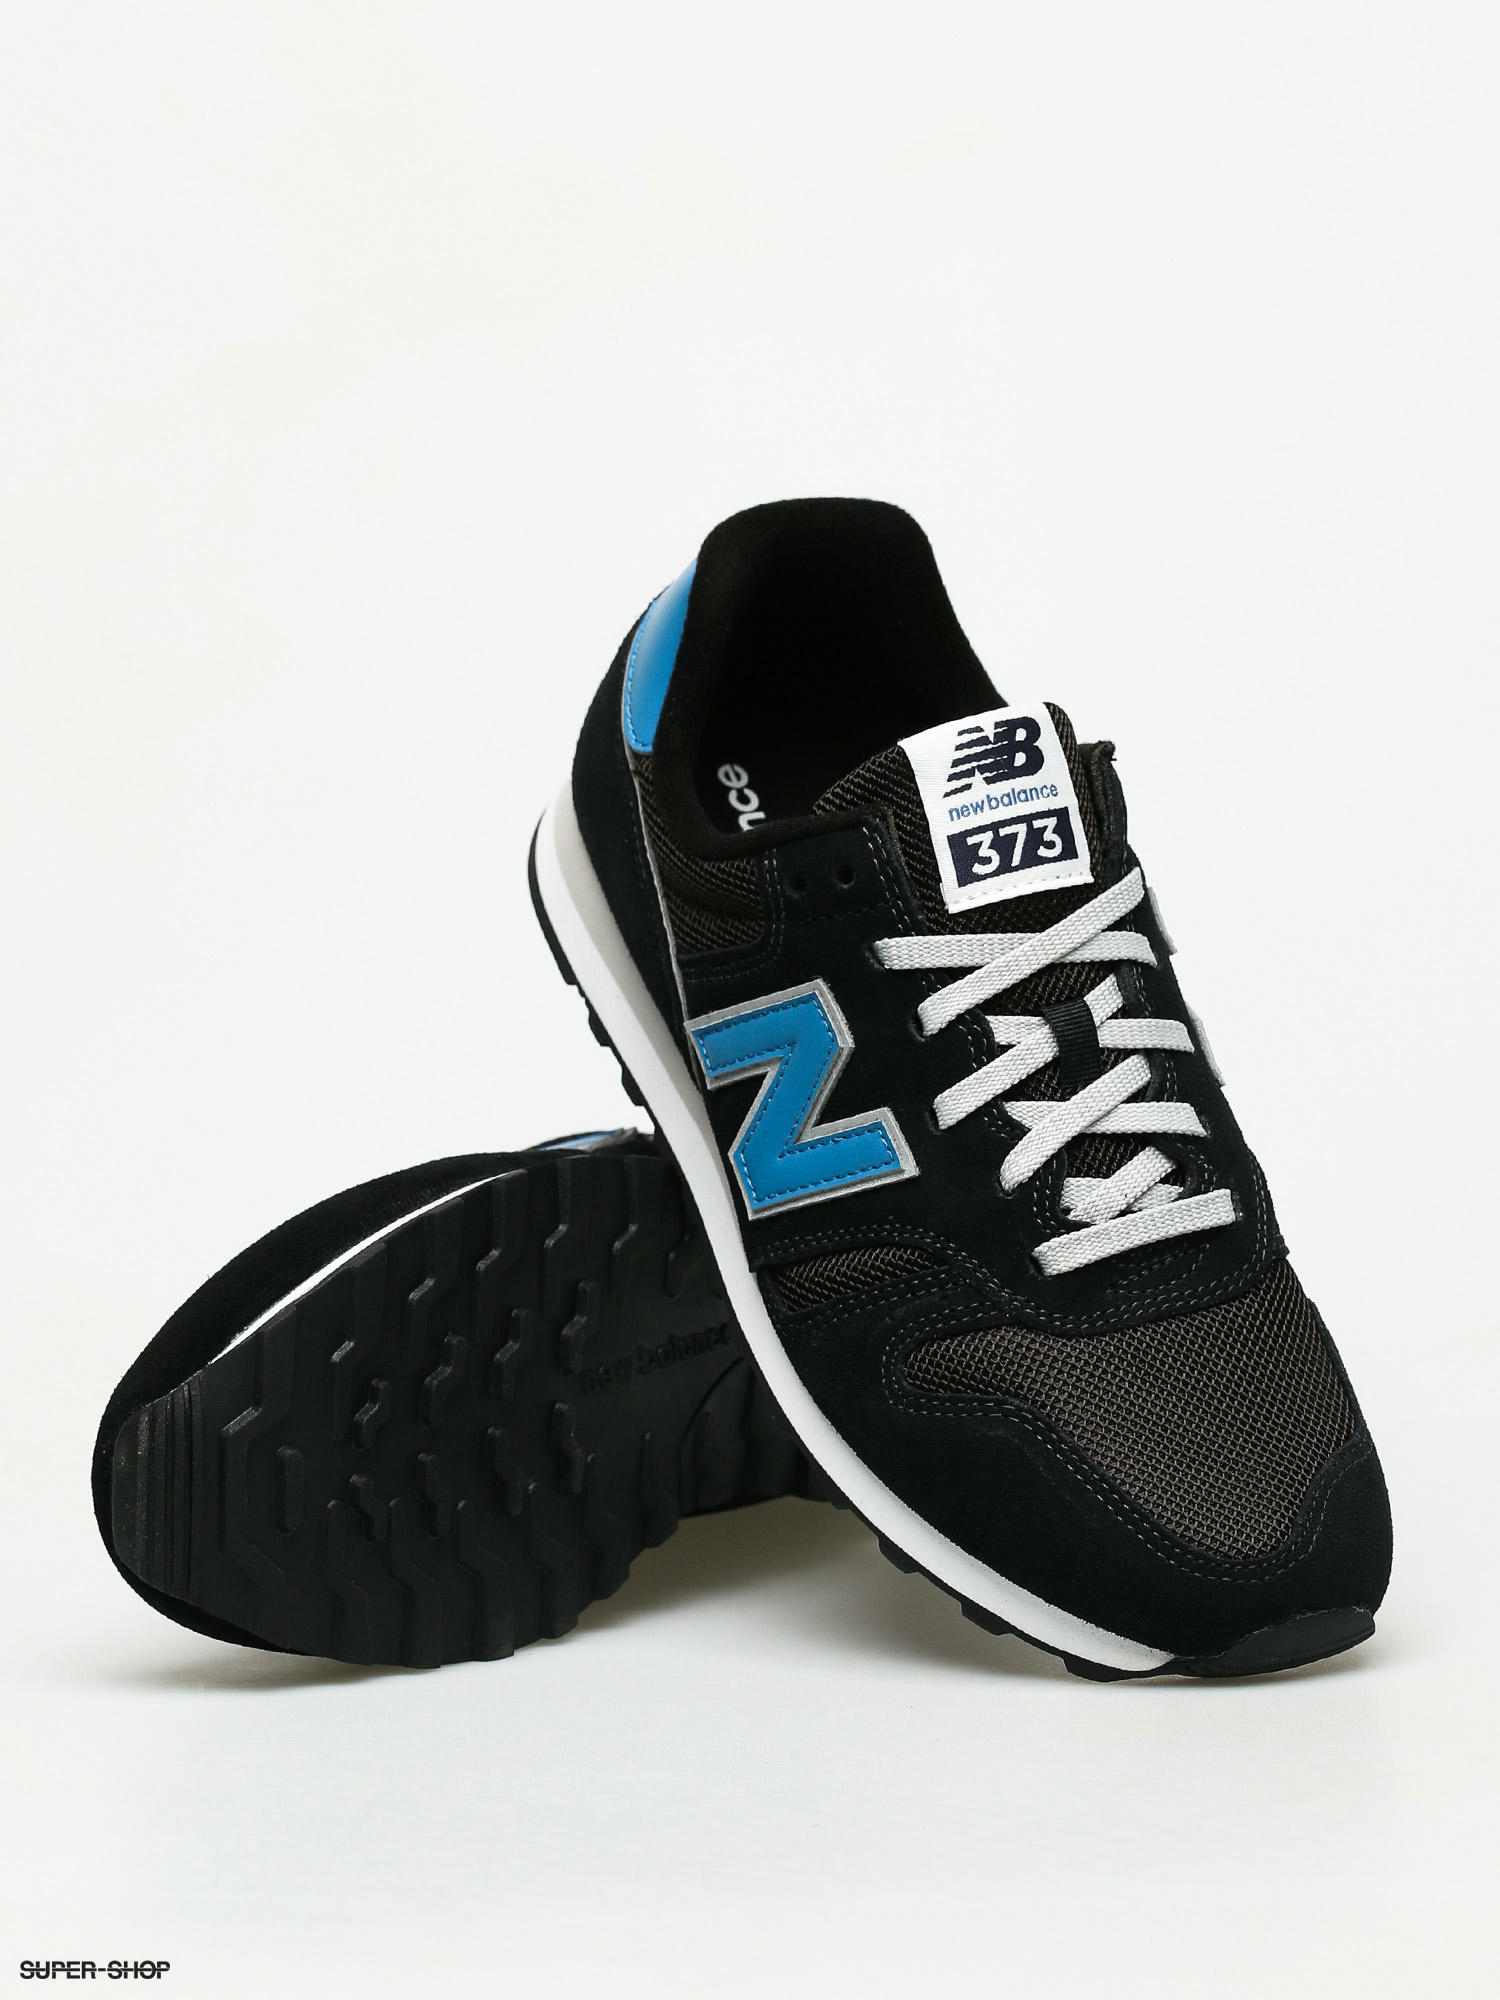 New Balance 373 Shoes (black/blue)